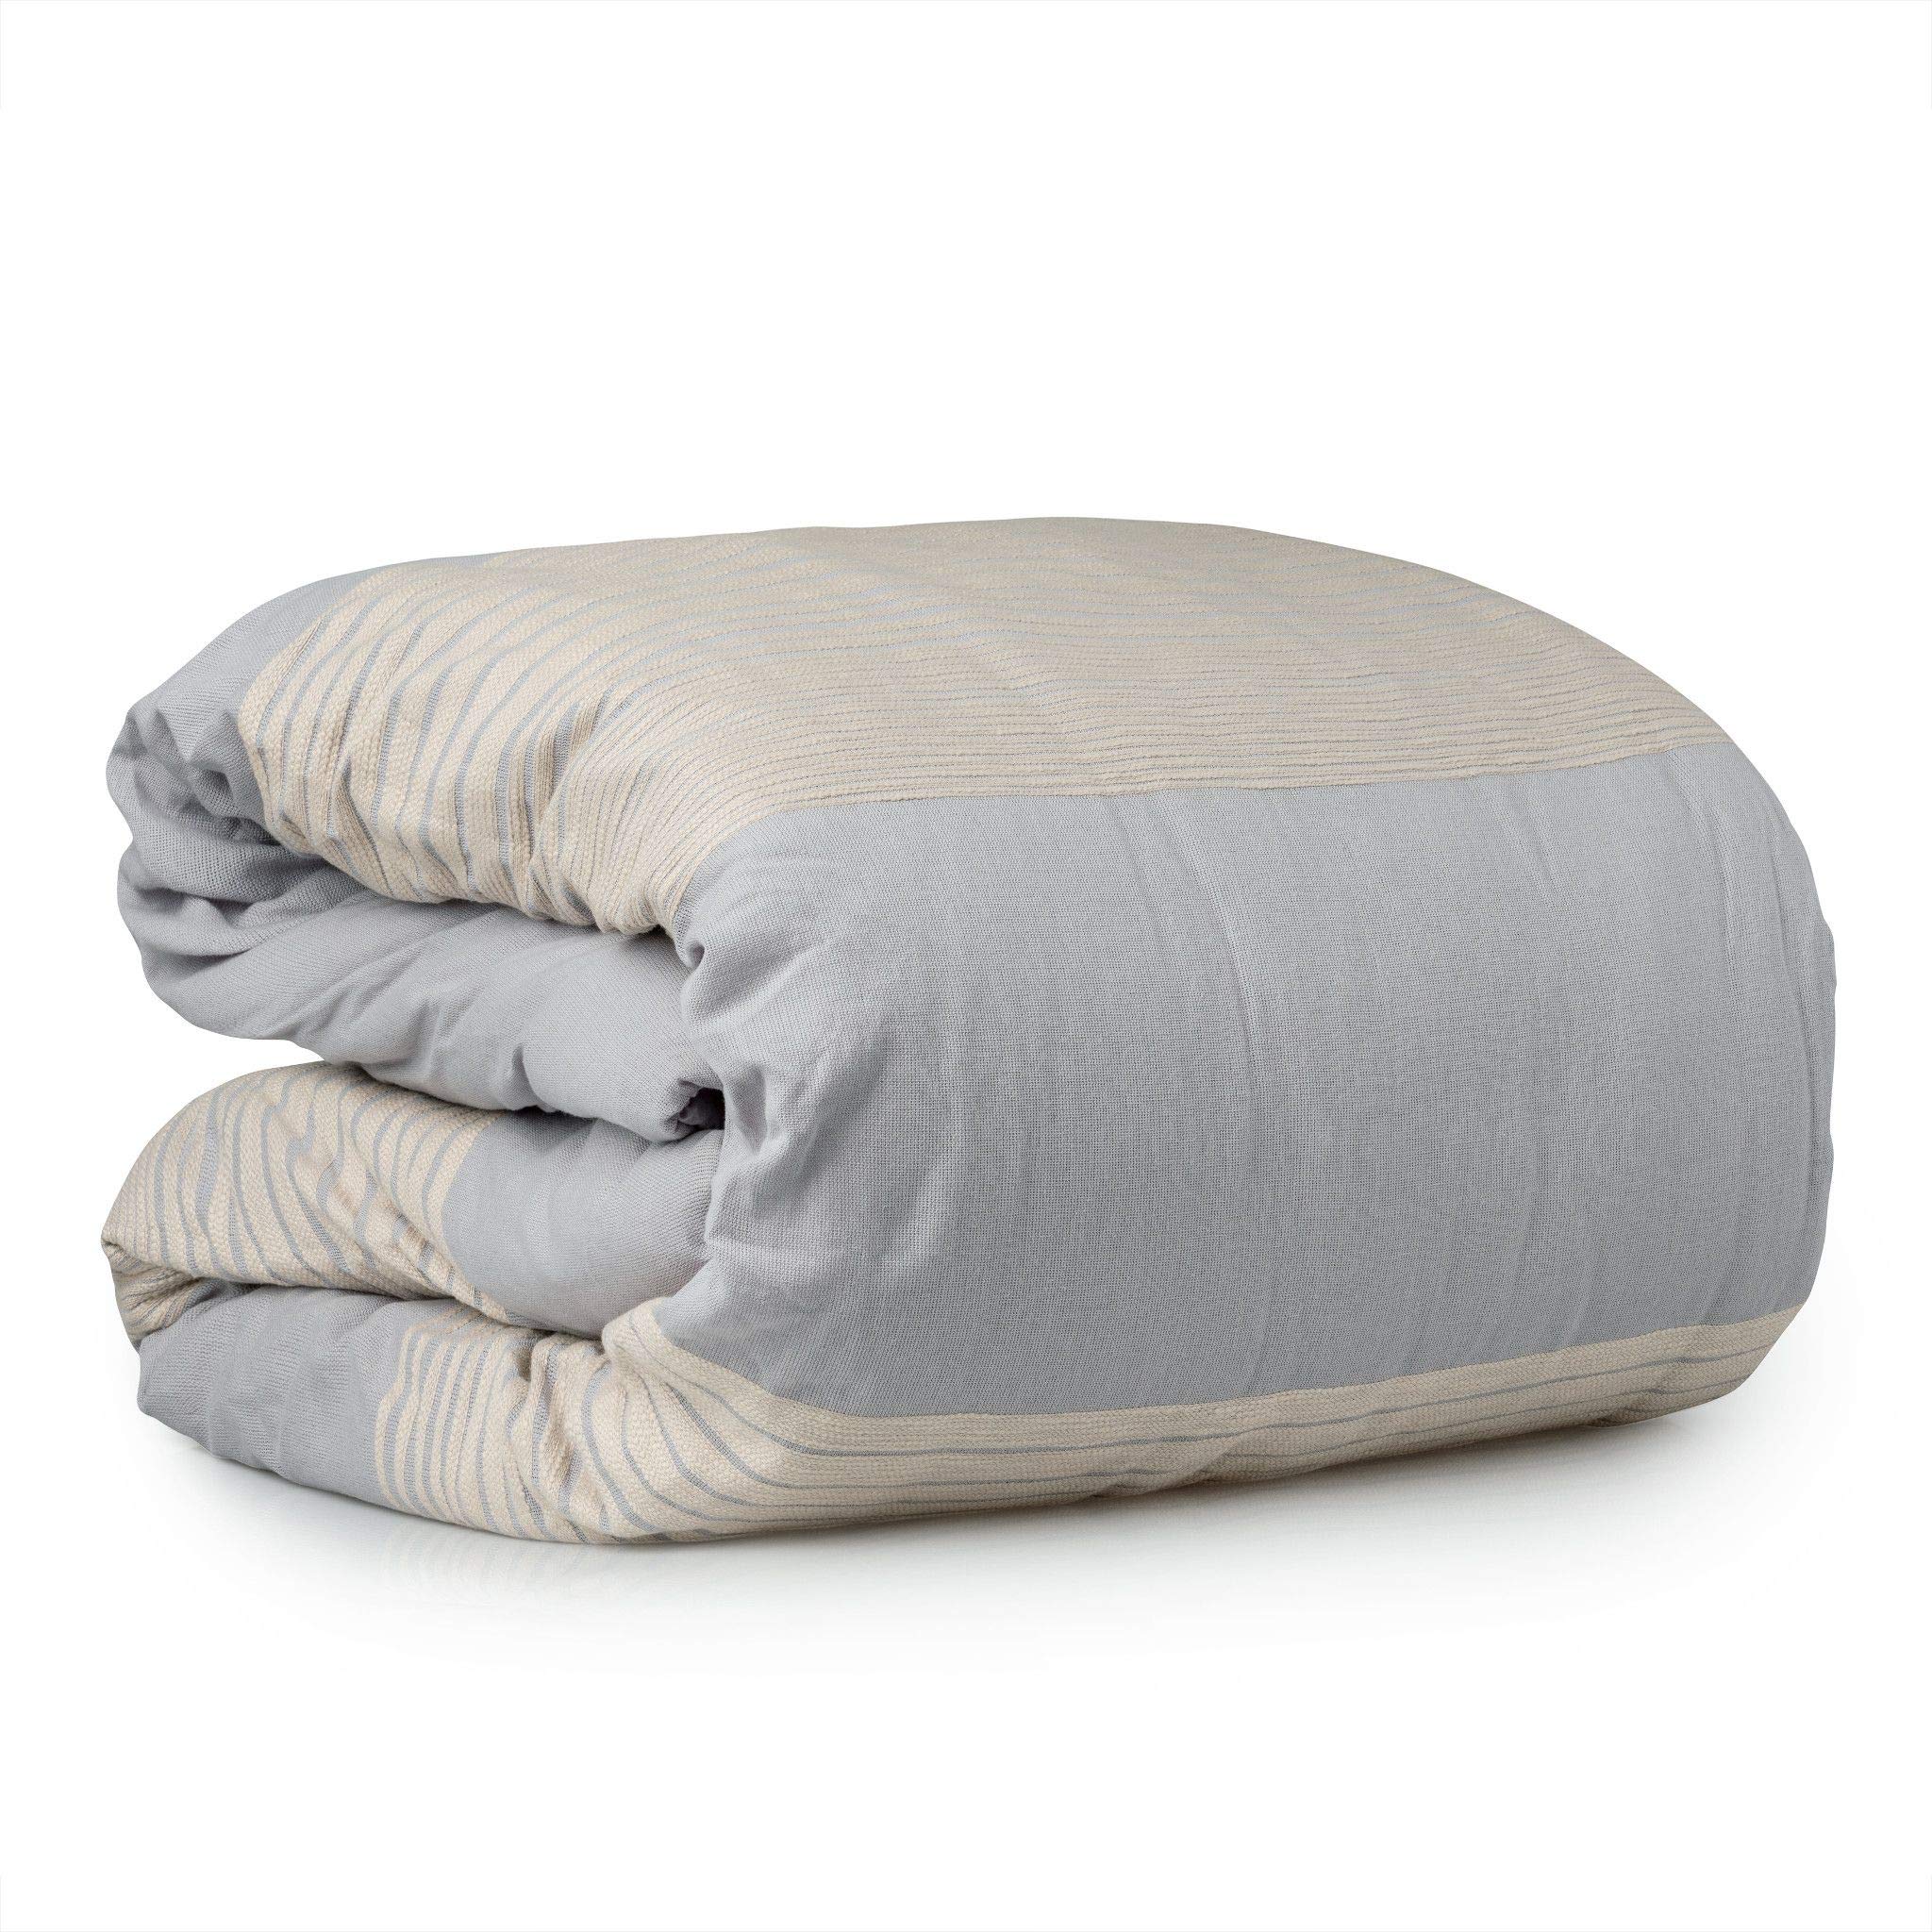 Welhome 100% Cotton Percale Crosby Stripe Comforter Set - King - 108" x 92"- Soft & Cozy - Slub Textured - Breathable - Machine Washable - Taupe